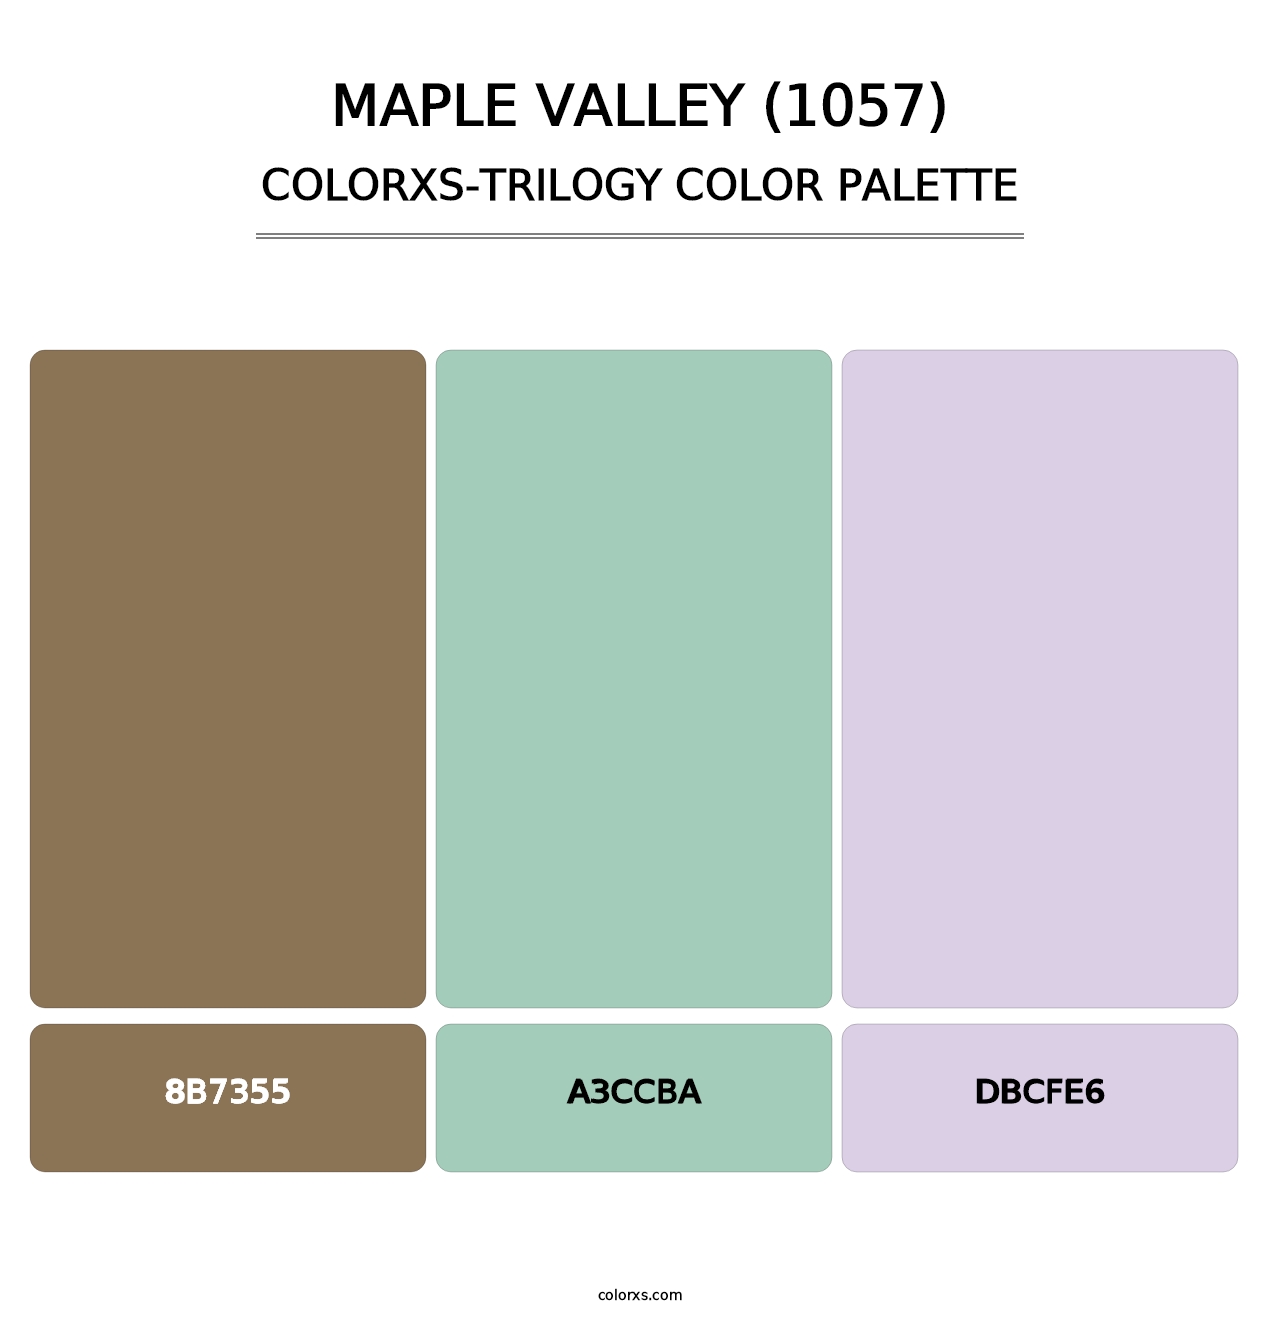 Maple Valley (1057) - Colorxs Trilogy Palette